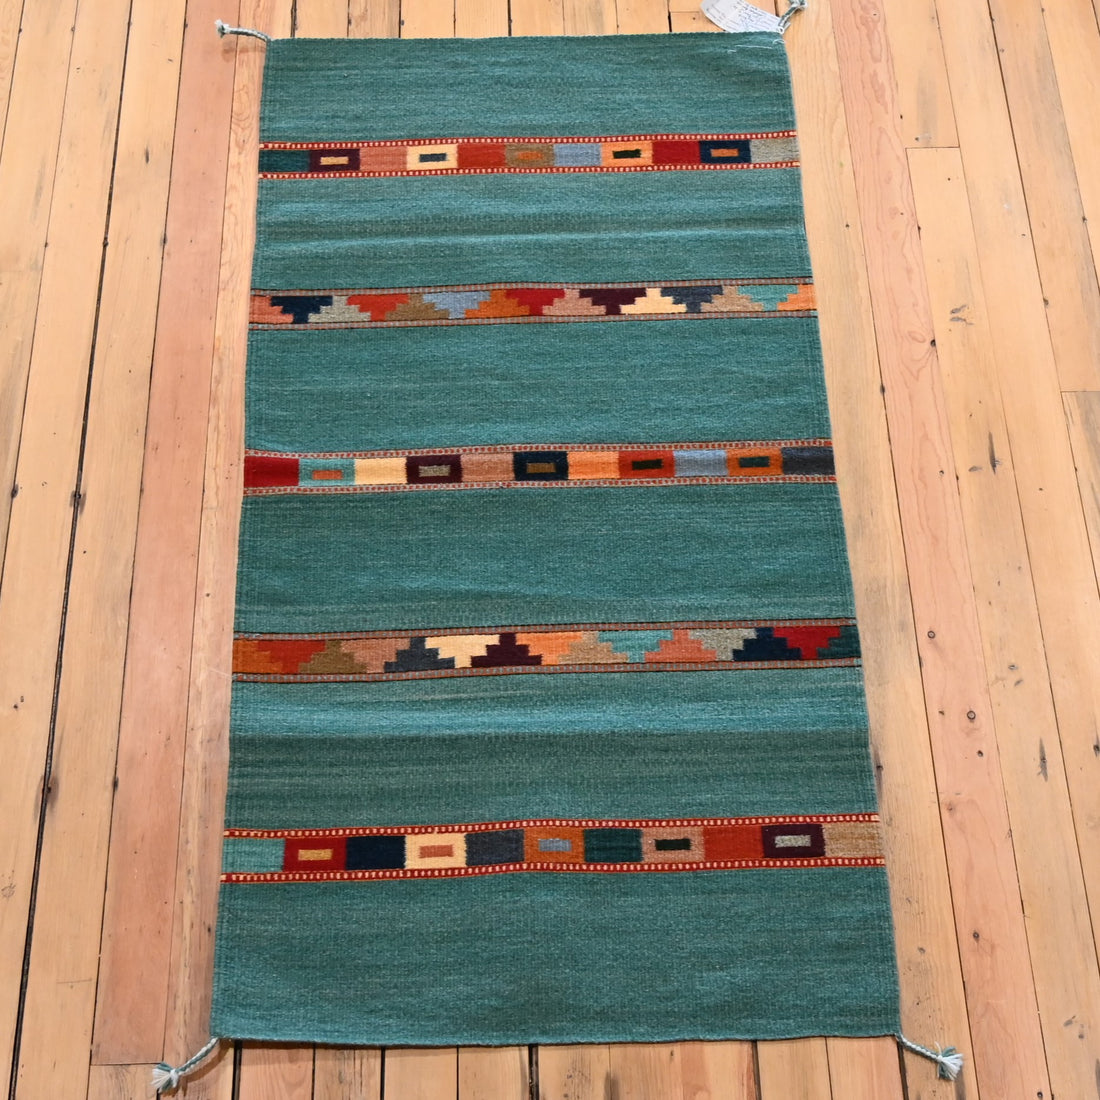 Escalante Rugs Hand Woven by Tony Ruiz view of rug